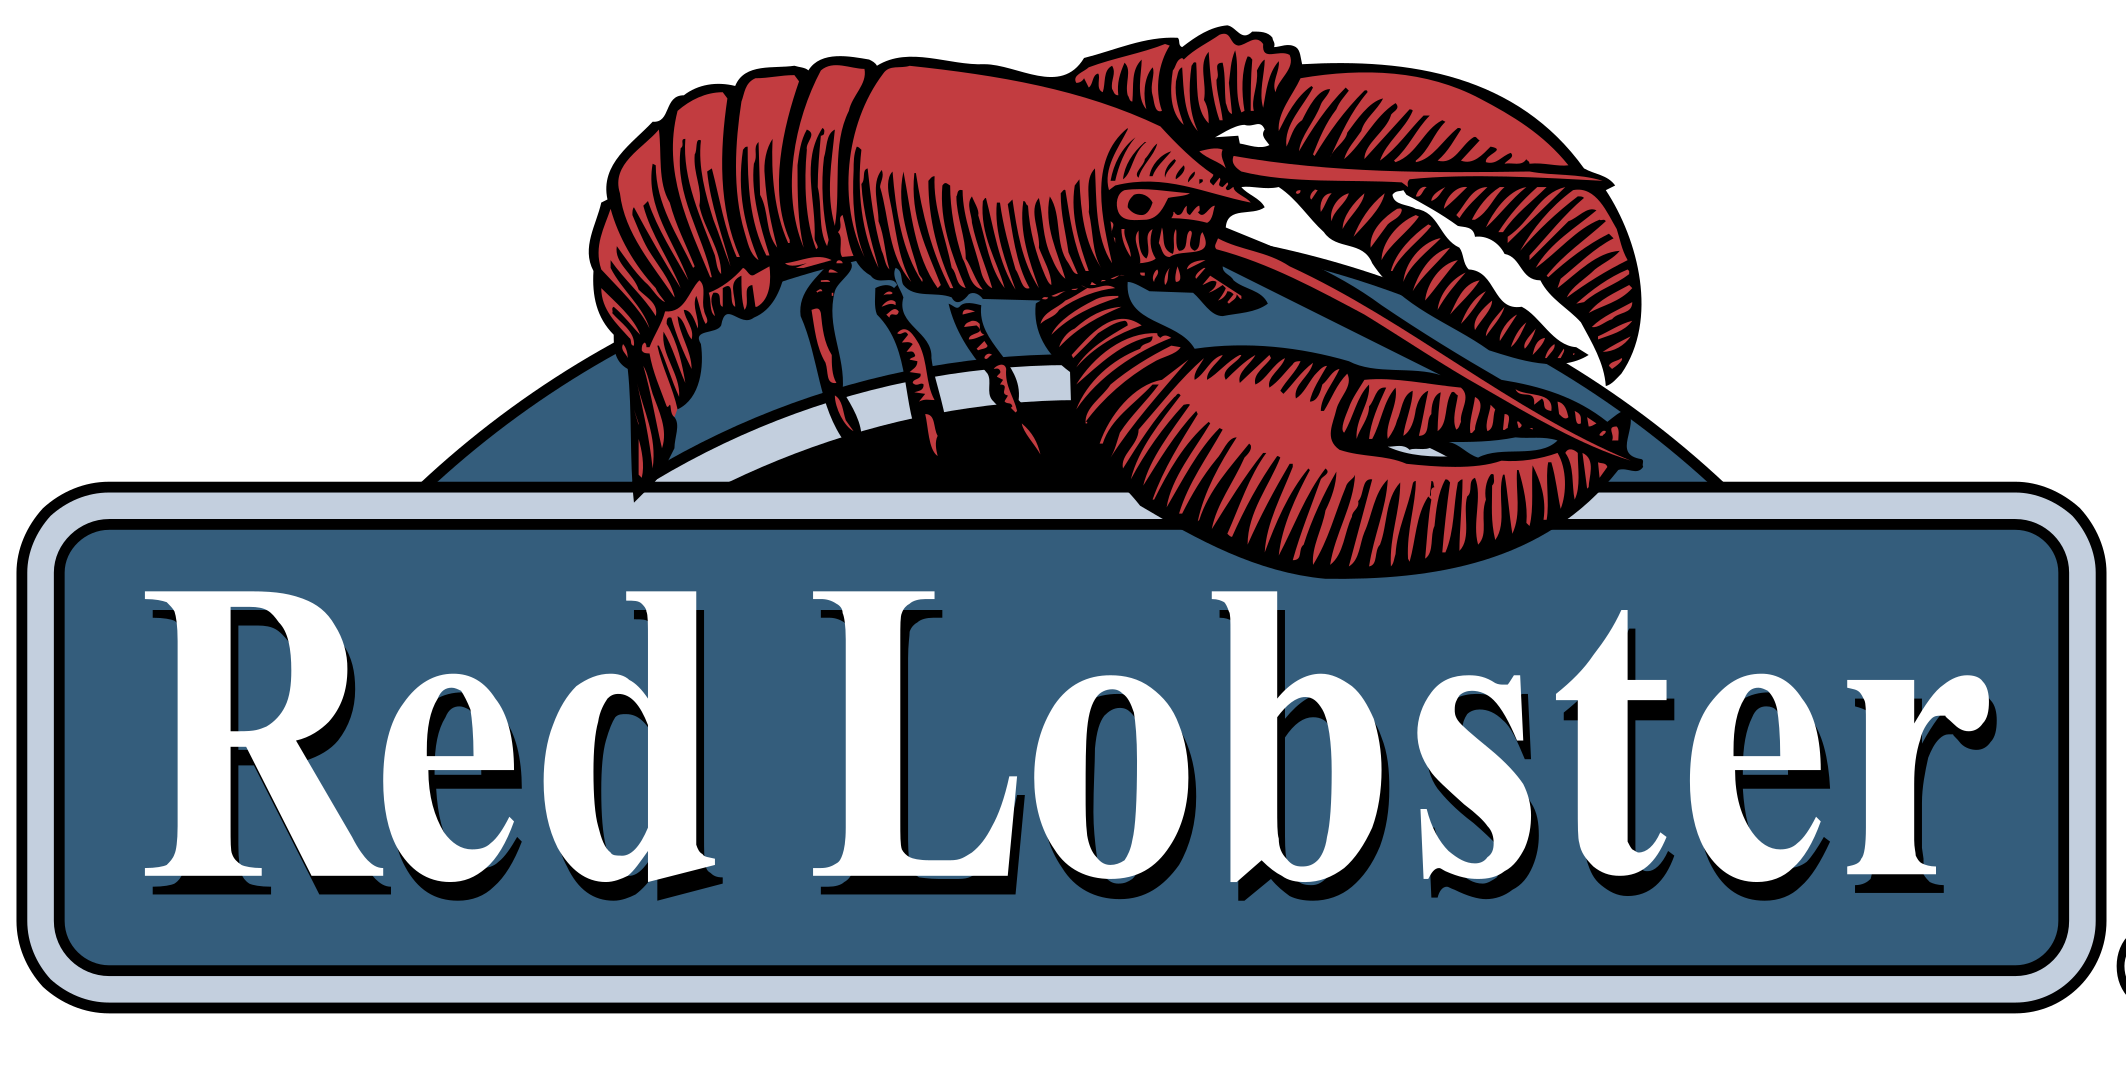 does red lobster have a senior menu